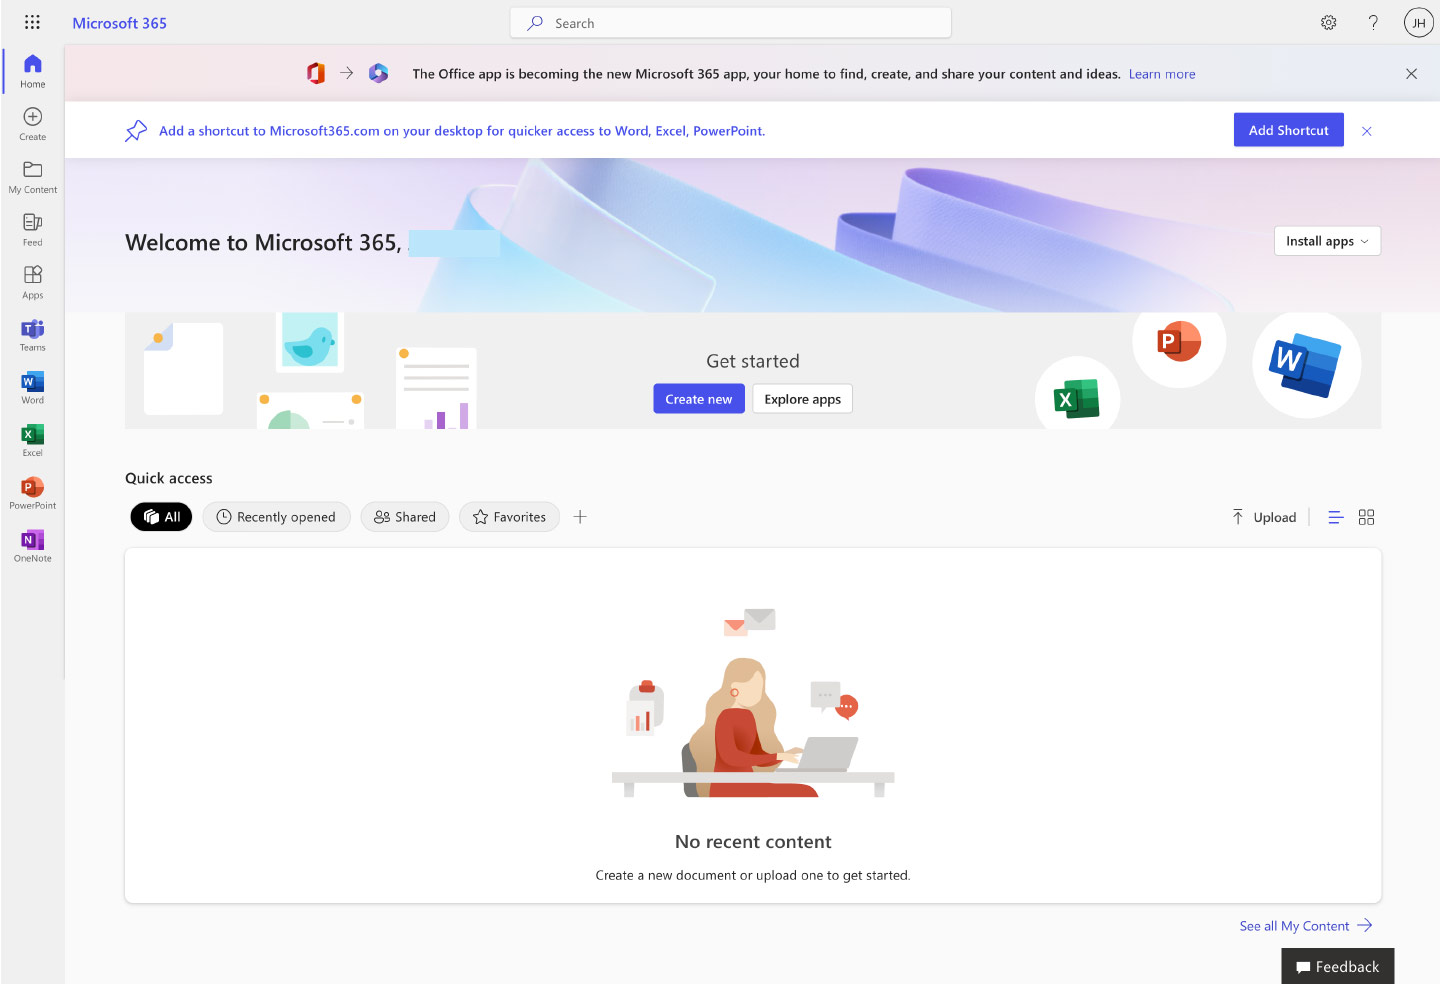 Screenshot showing a portion of Microsoft 365's dashboard